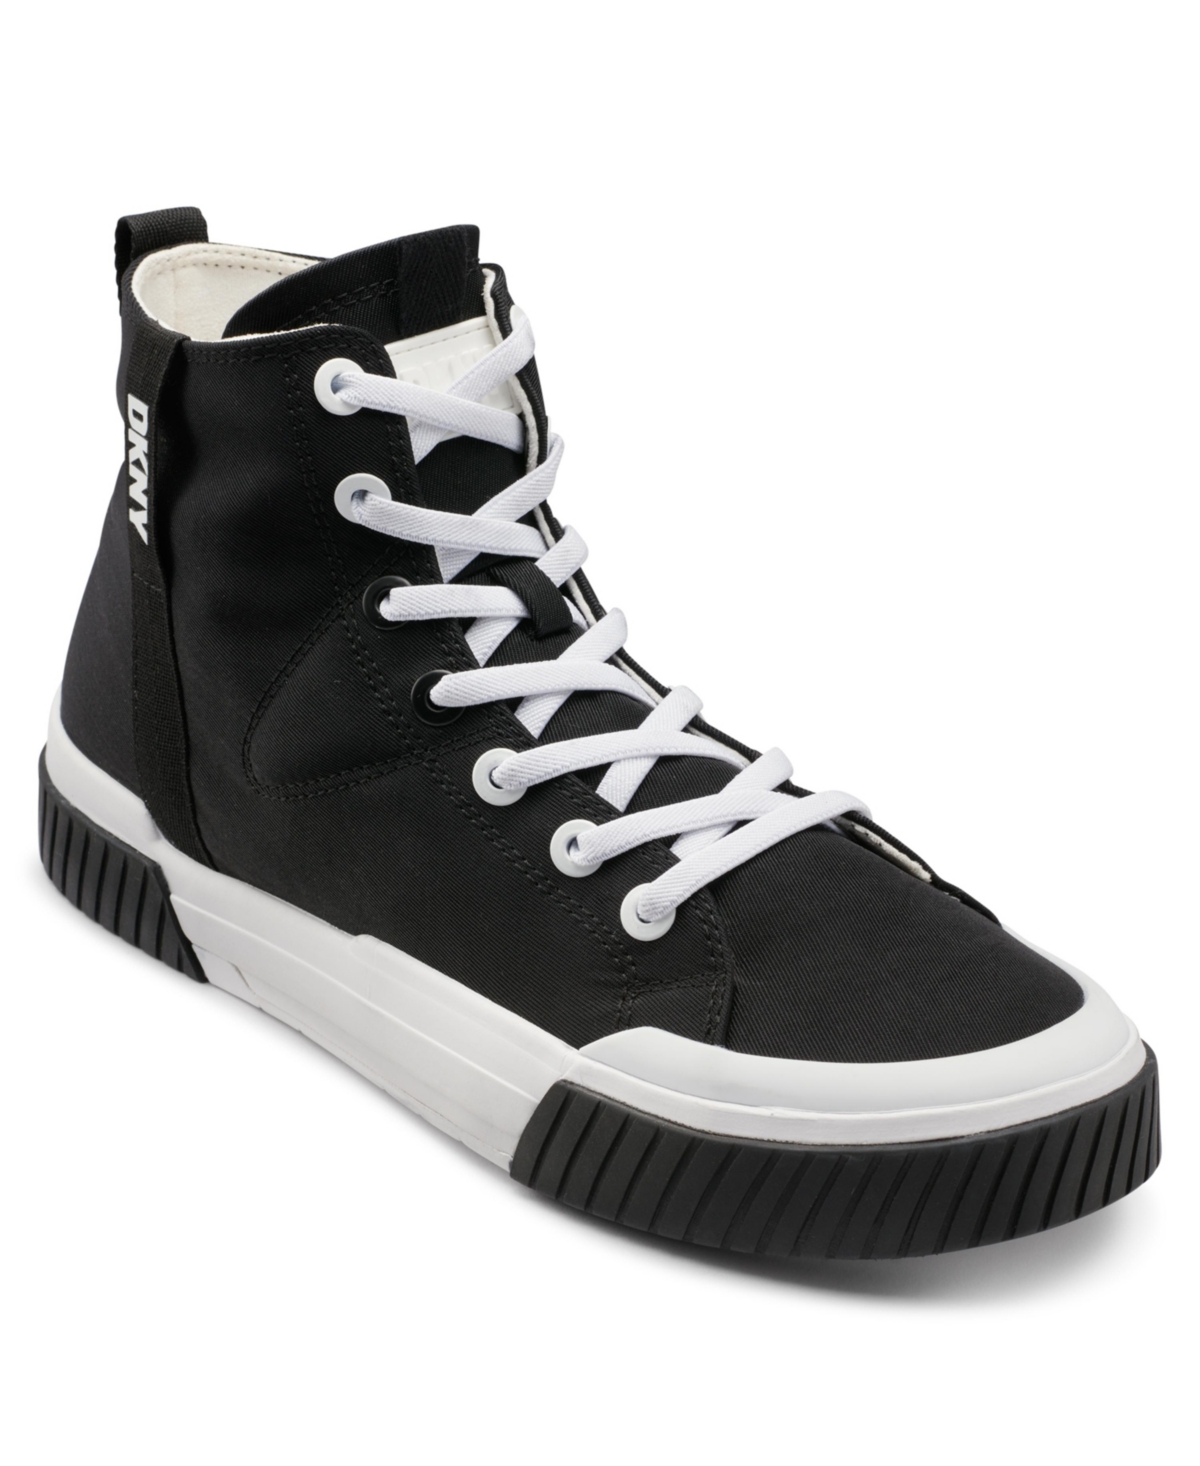 Men's Nylon Two Tone Branded Sole Hi Top Sneakers - Black